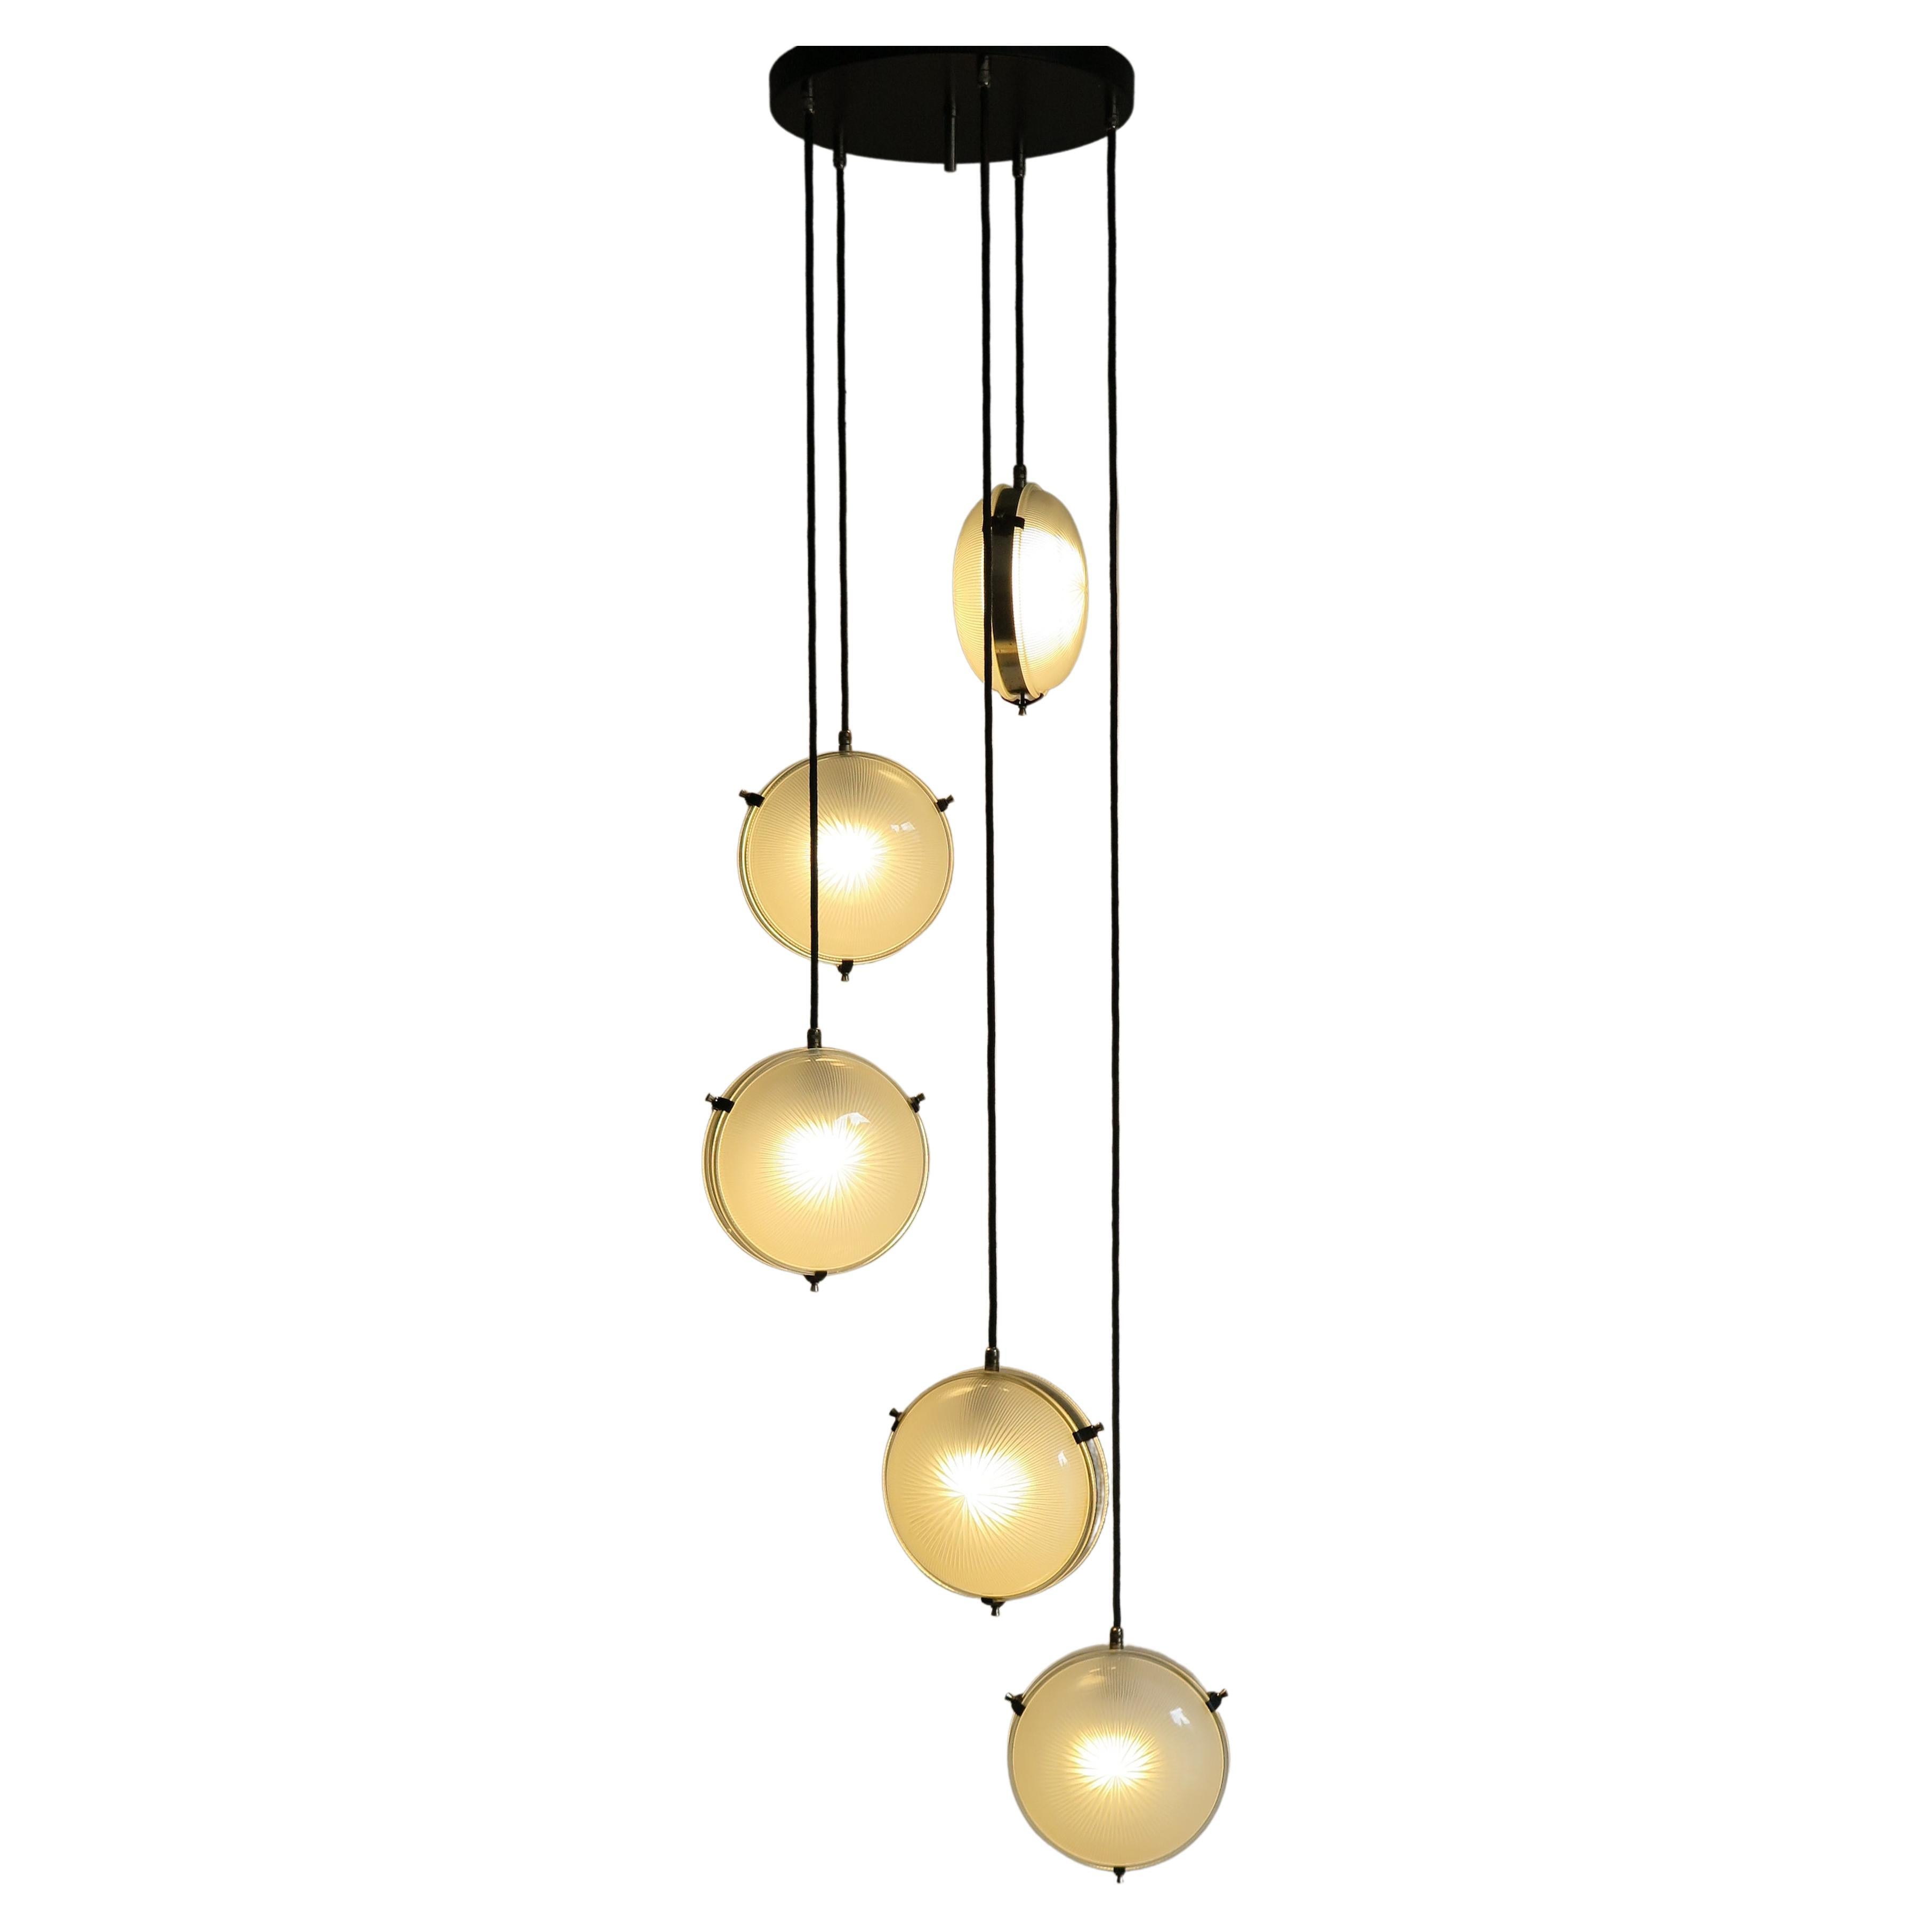 Sergio Mazza for Artemide Italian Mid-Century Modern Glass Pendant Lamp, 1960s